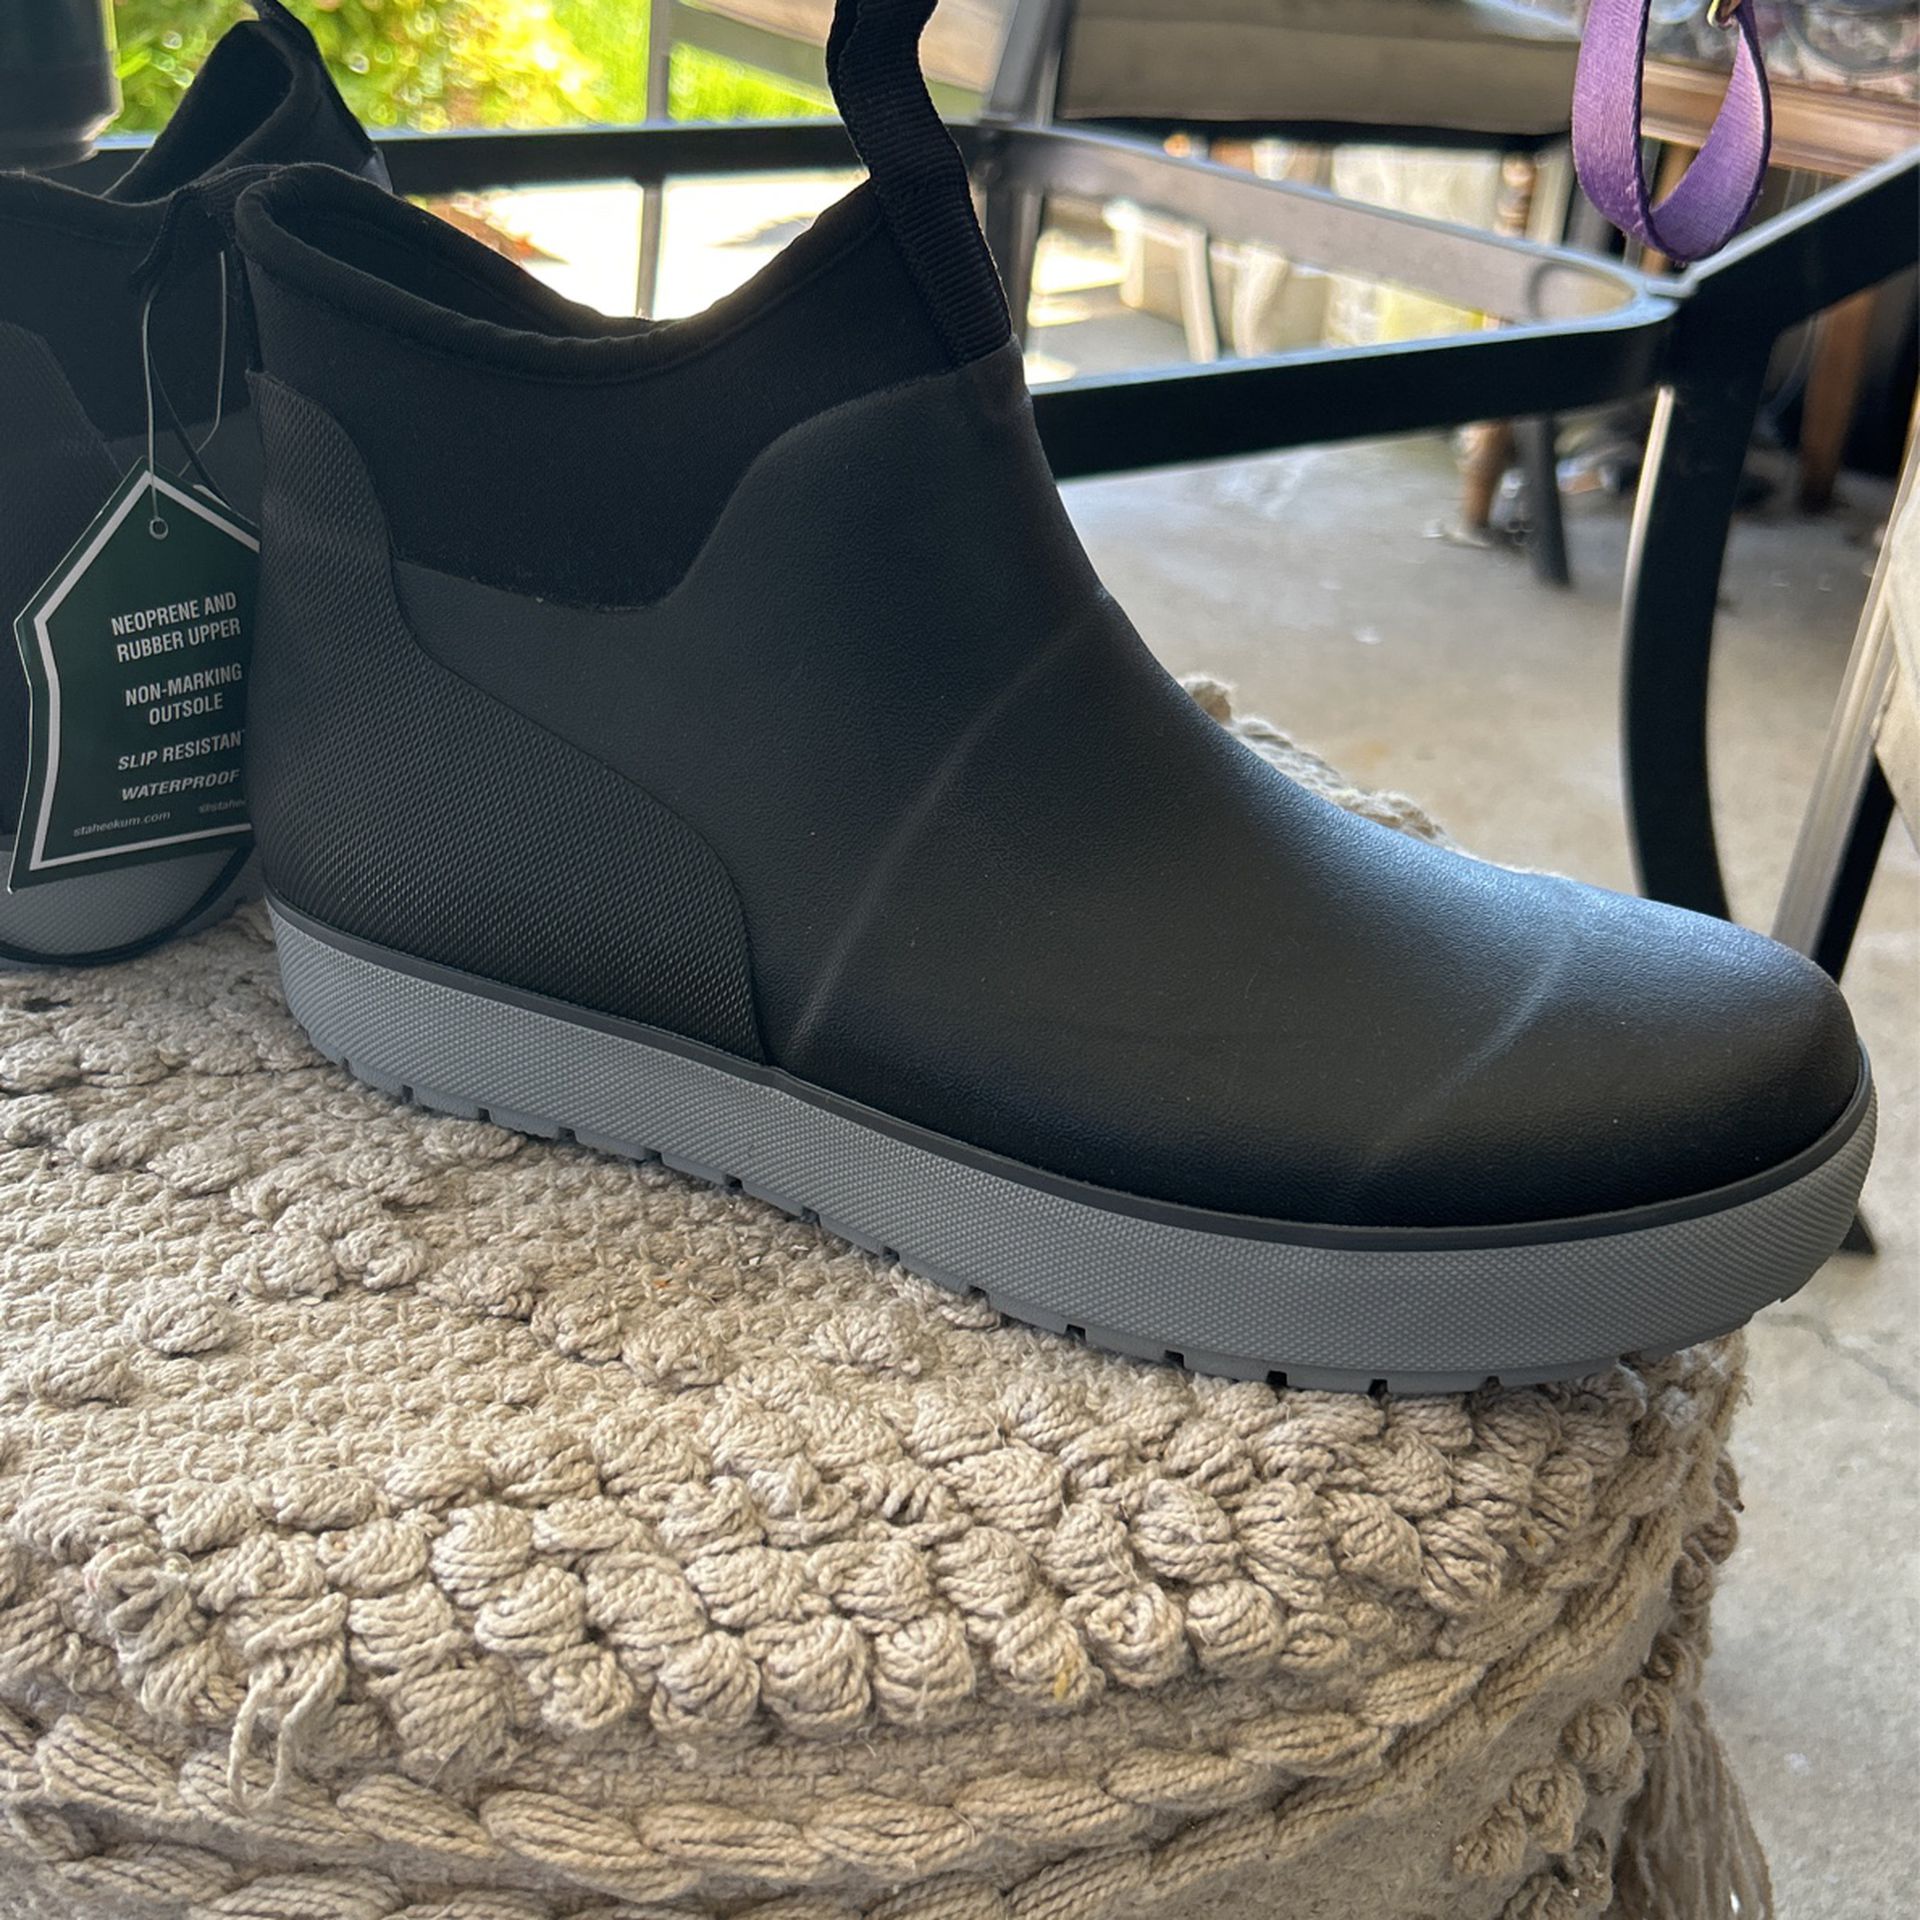 Brand New Staheekum Men's Rain Boot, Black Chelsea Shoe Waterproof Rubber, Slip-Resistant